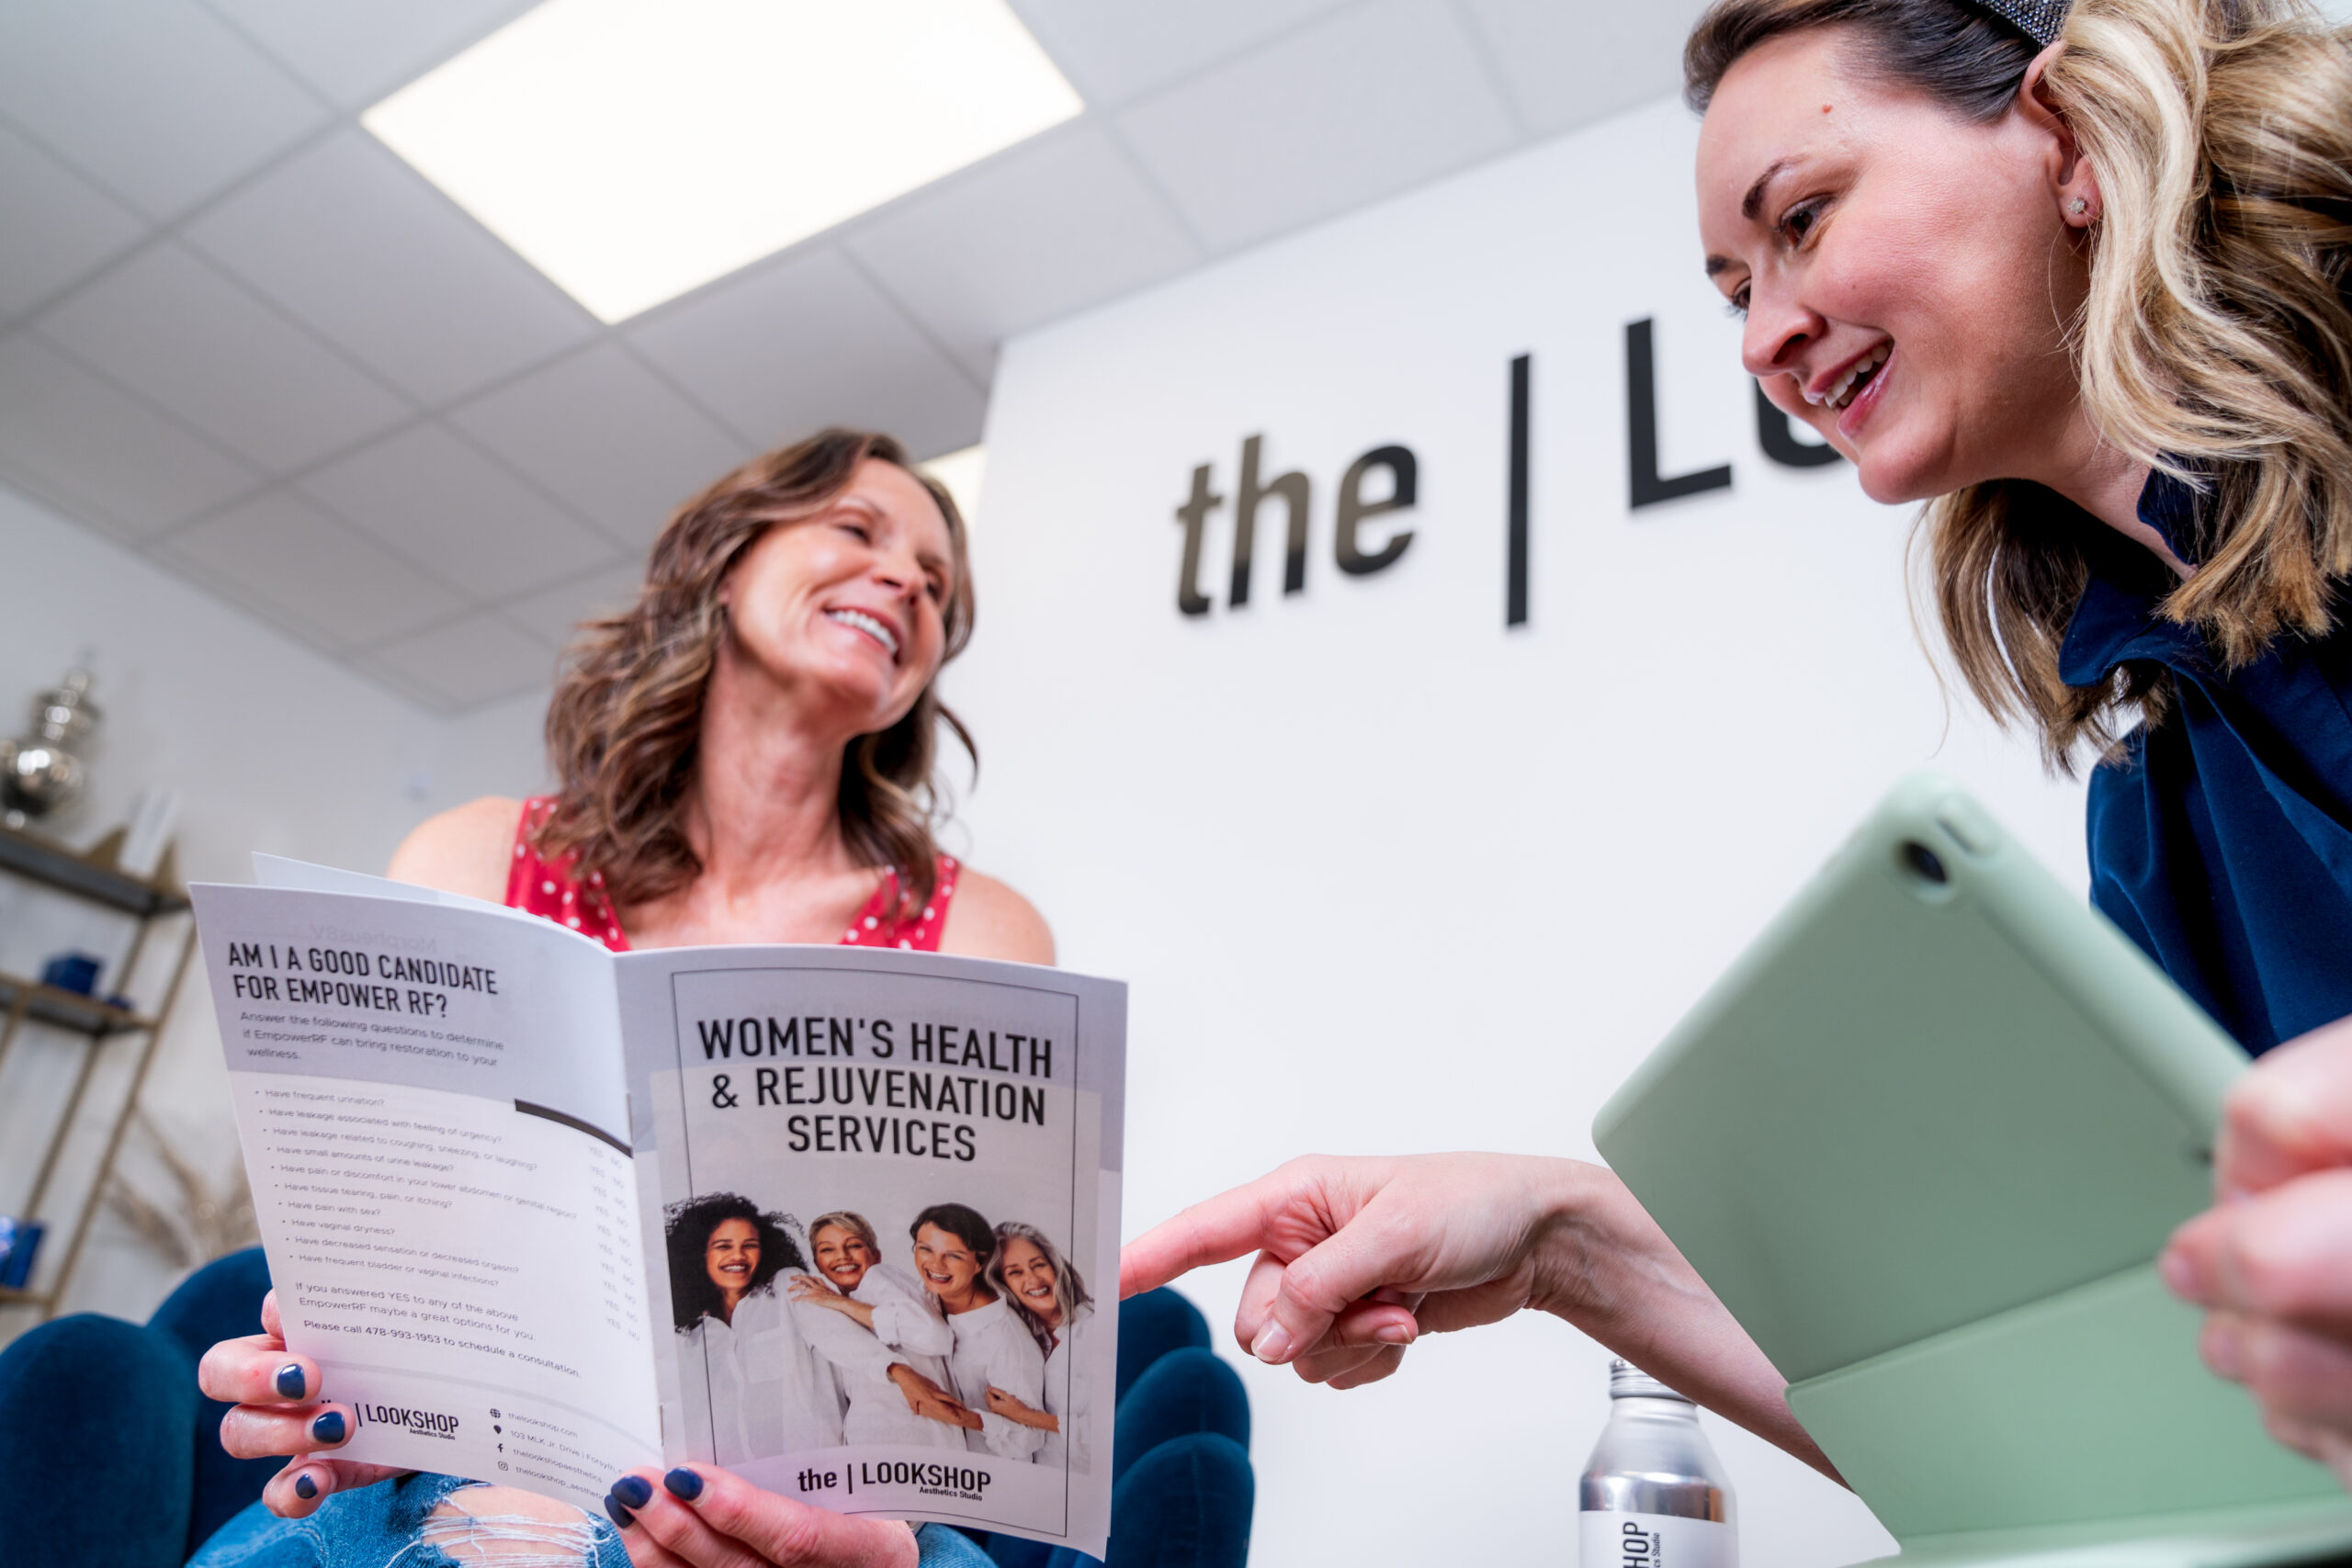 A patient reviews the women's health brochure at The Lookshop.